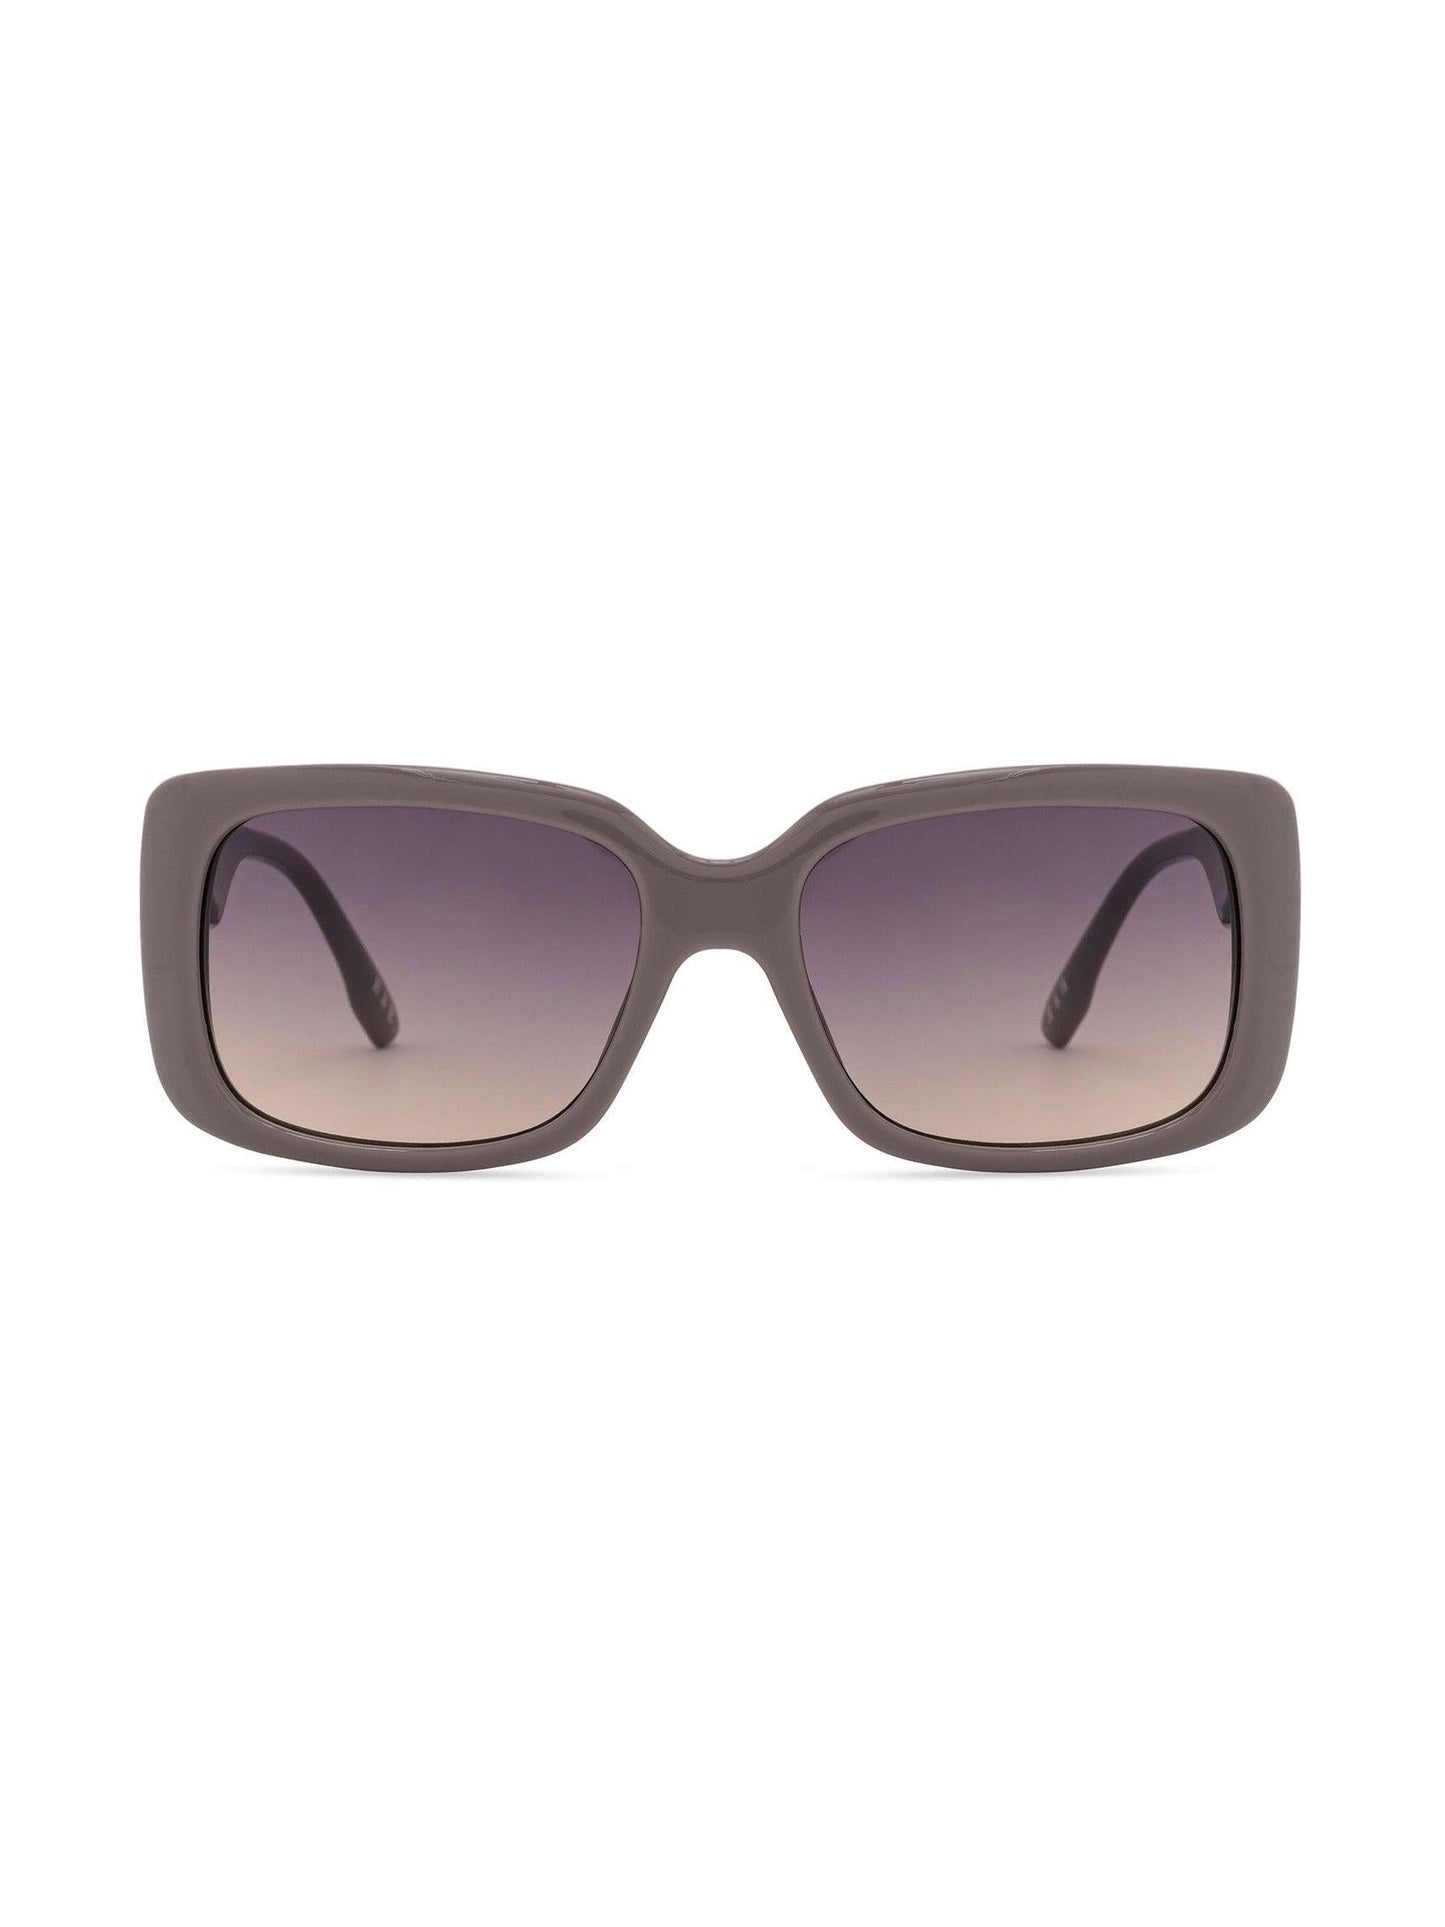 HAILEY Premium Sunglasses with "HELLO SUMMER." Signature Font - Rae Dunn Wear